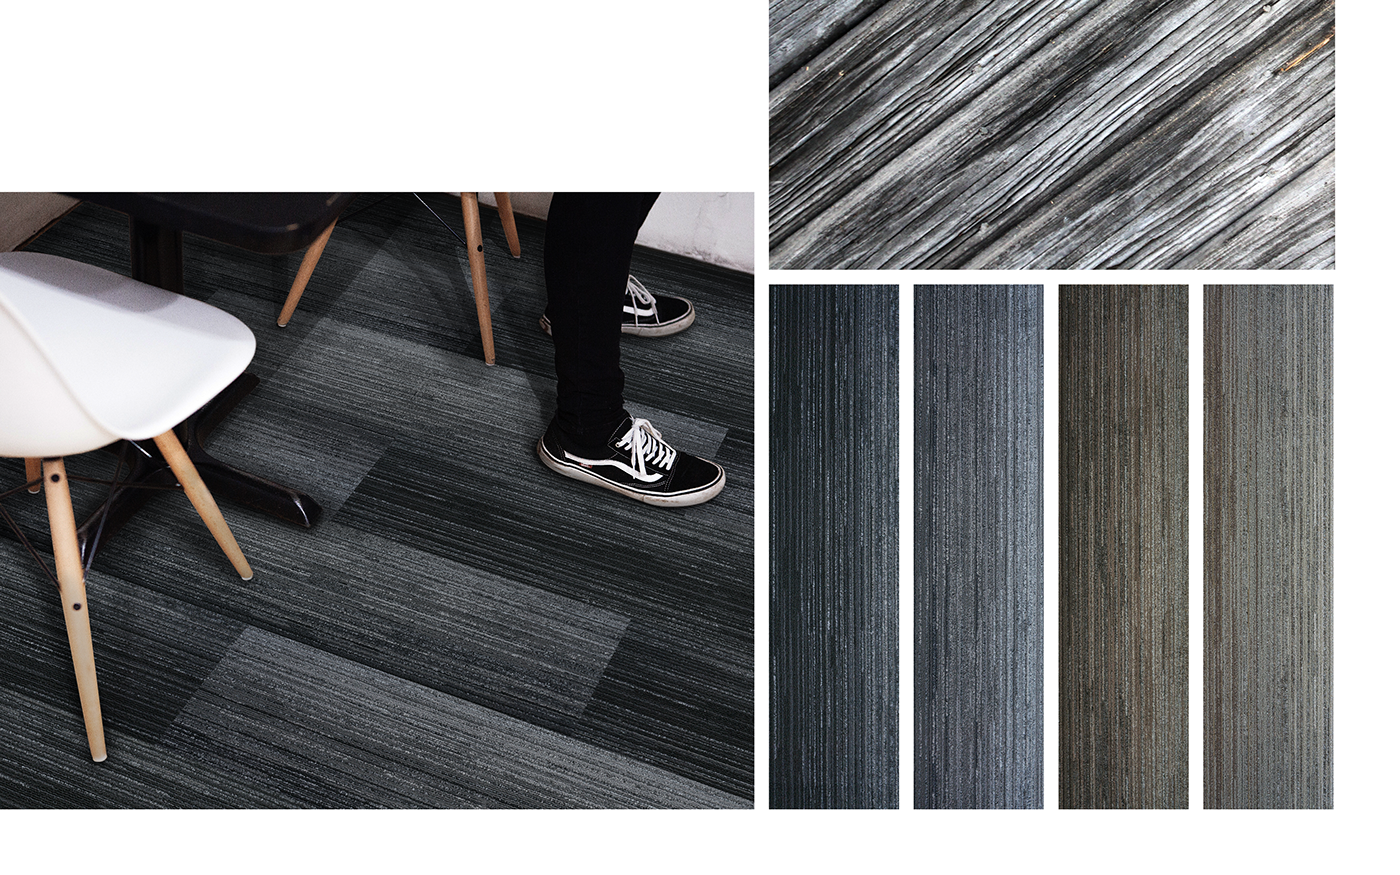 carpet tile carpet product design  architecture interior design  design grey textile flooring surface